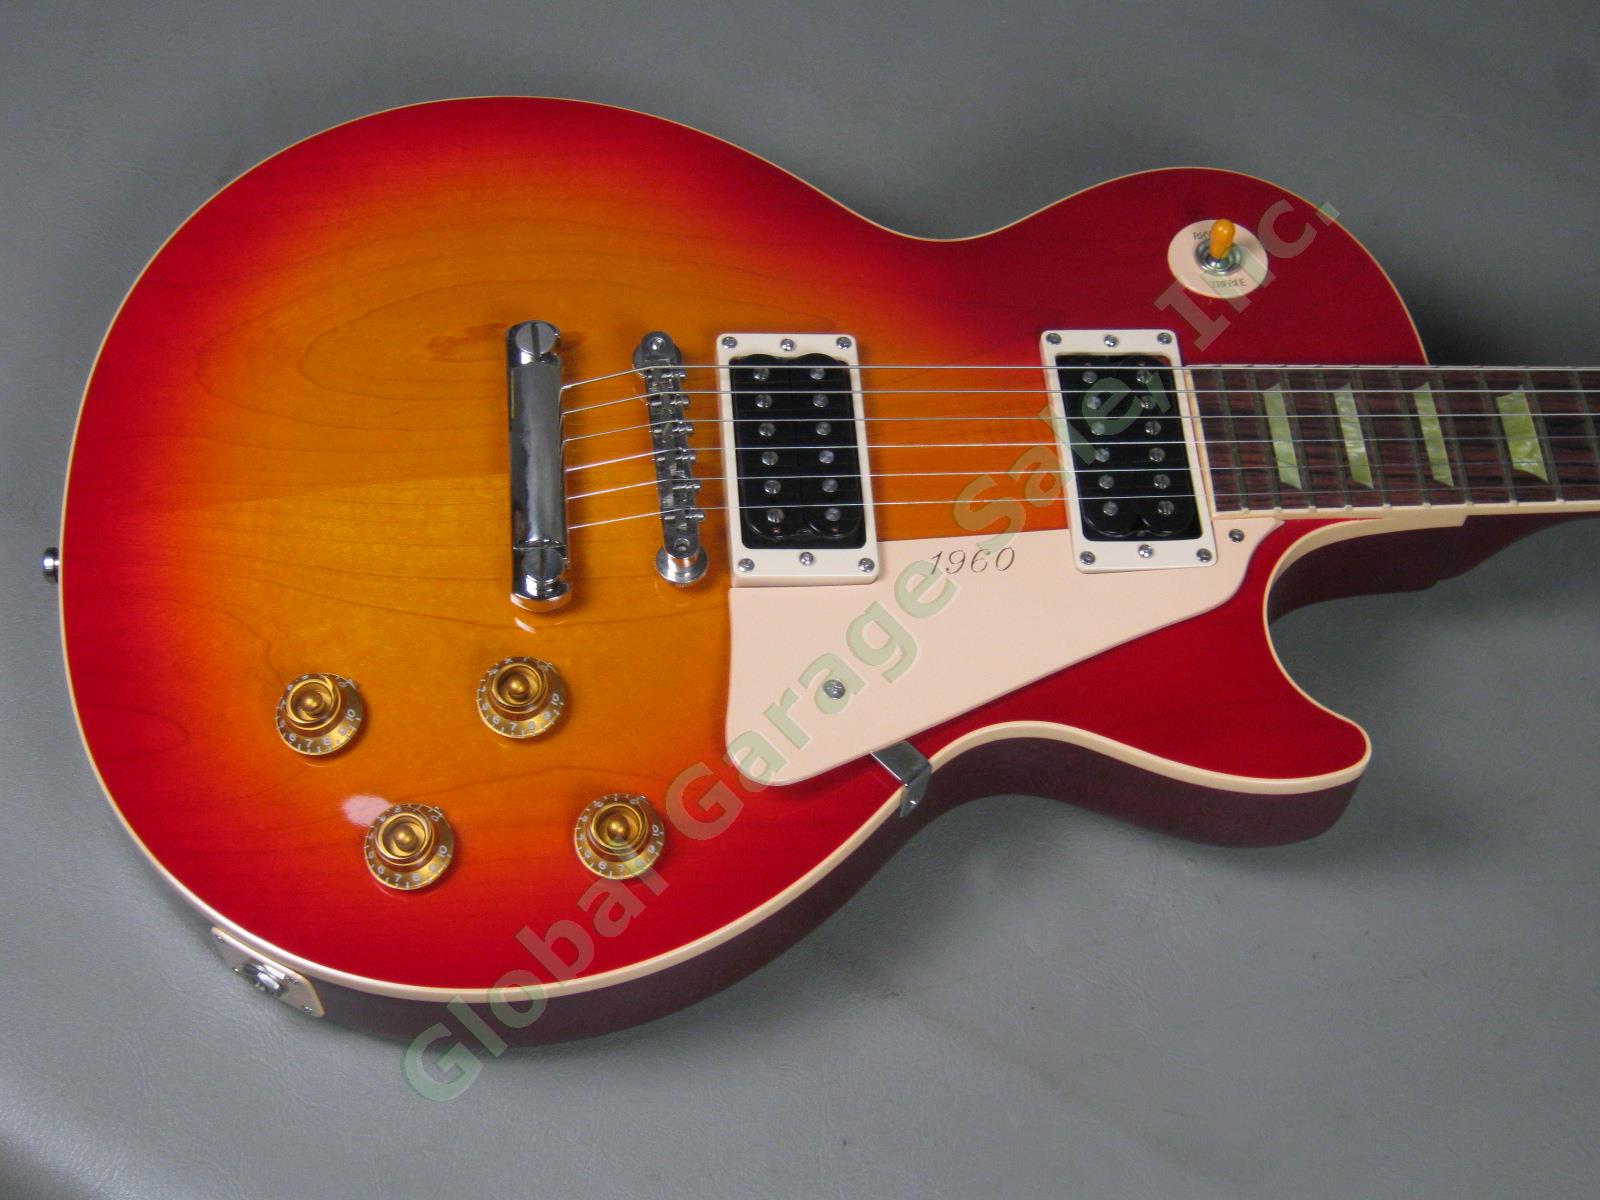 MINT! 2001 Gibson Les Paul Classic 1960 Reissue Sunburst Guitar One Owner w/Case 2